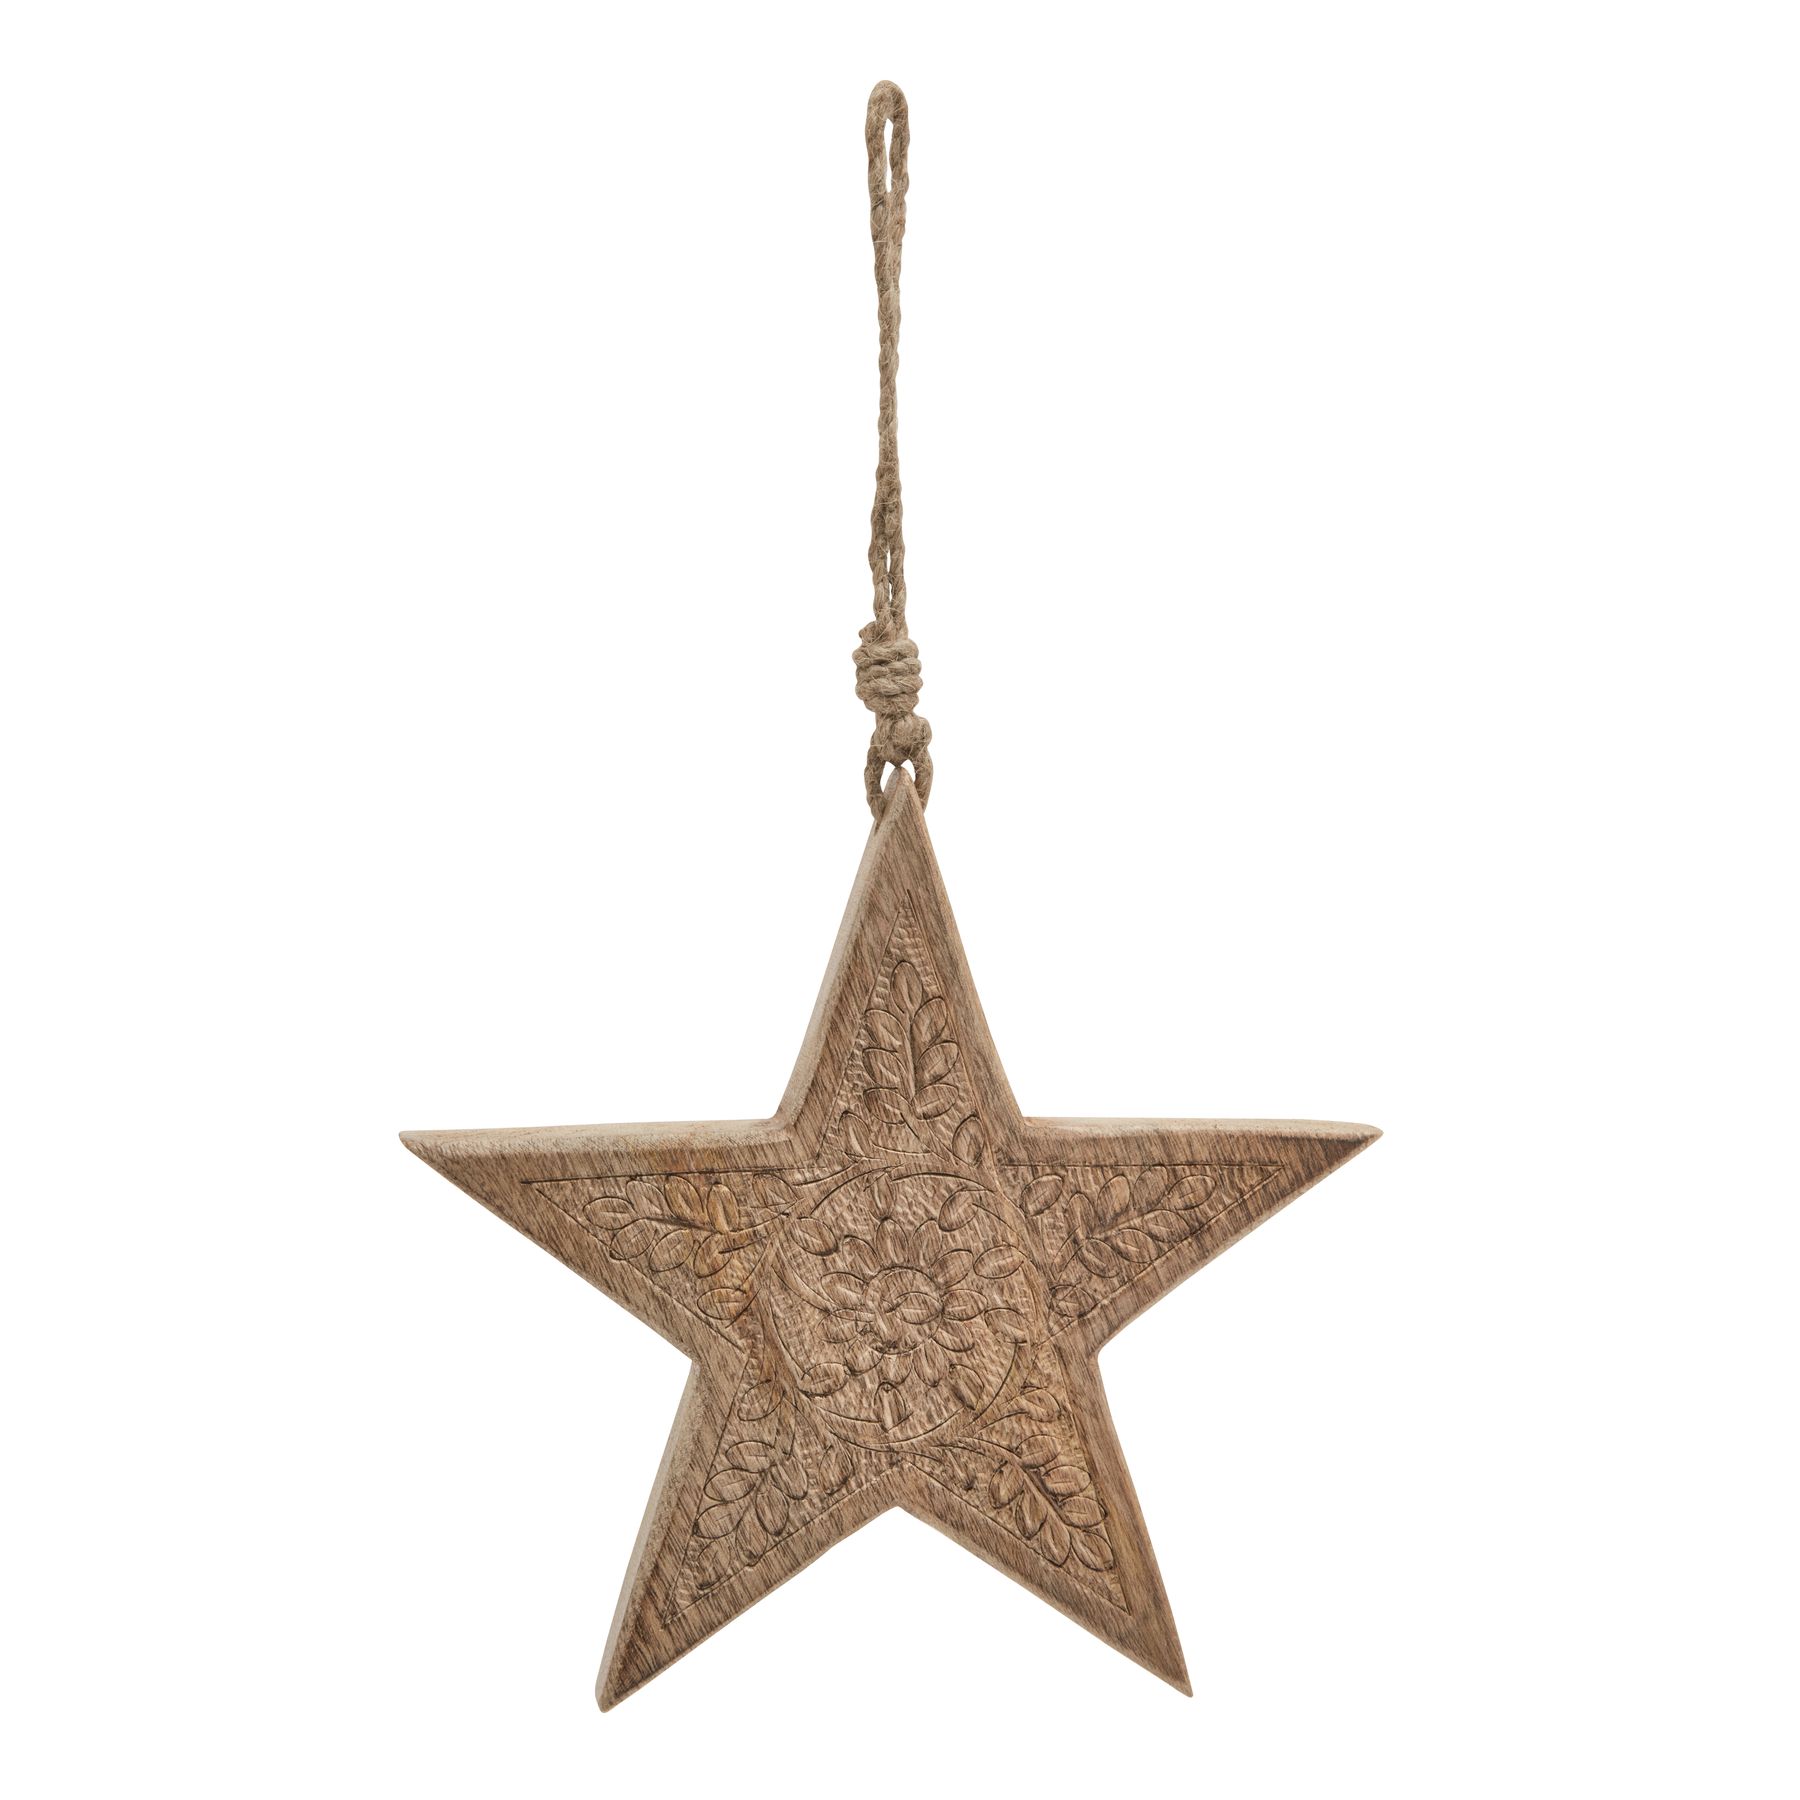 Natural Wooden Patterned Hanging Star - Image 2